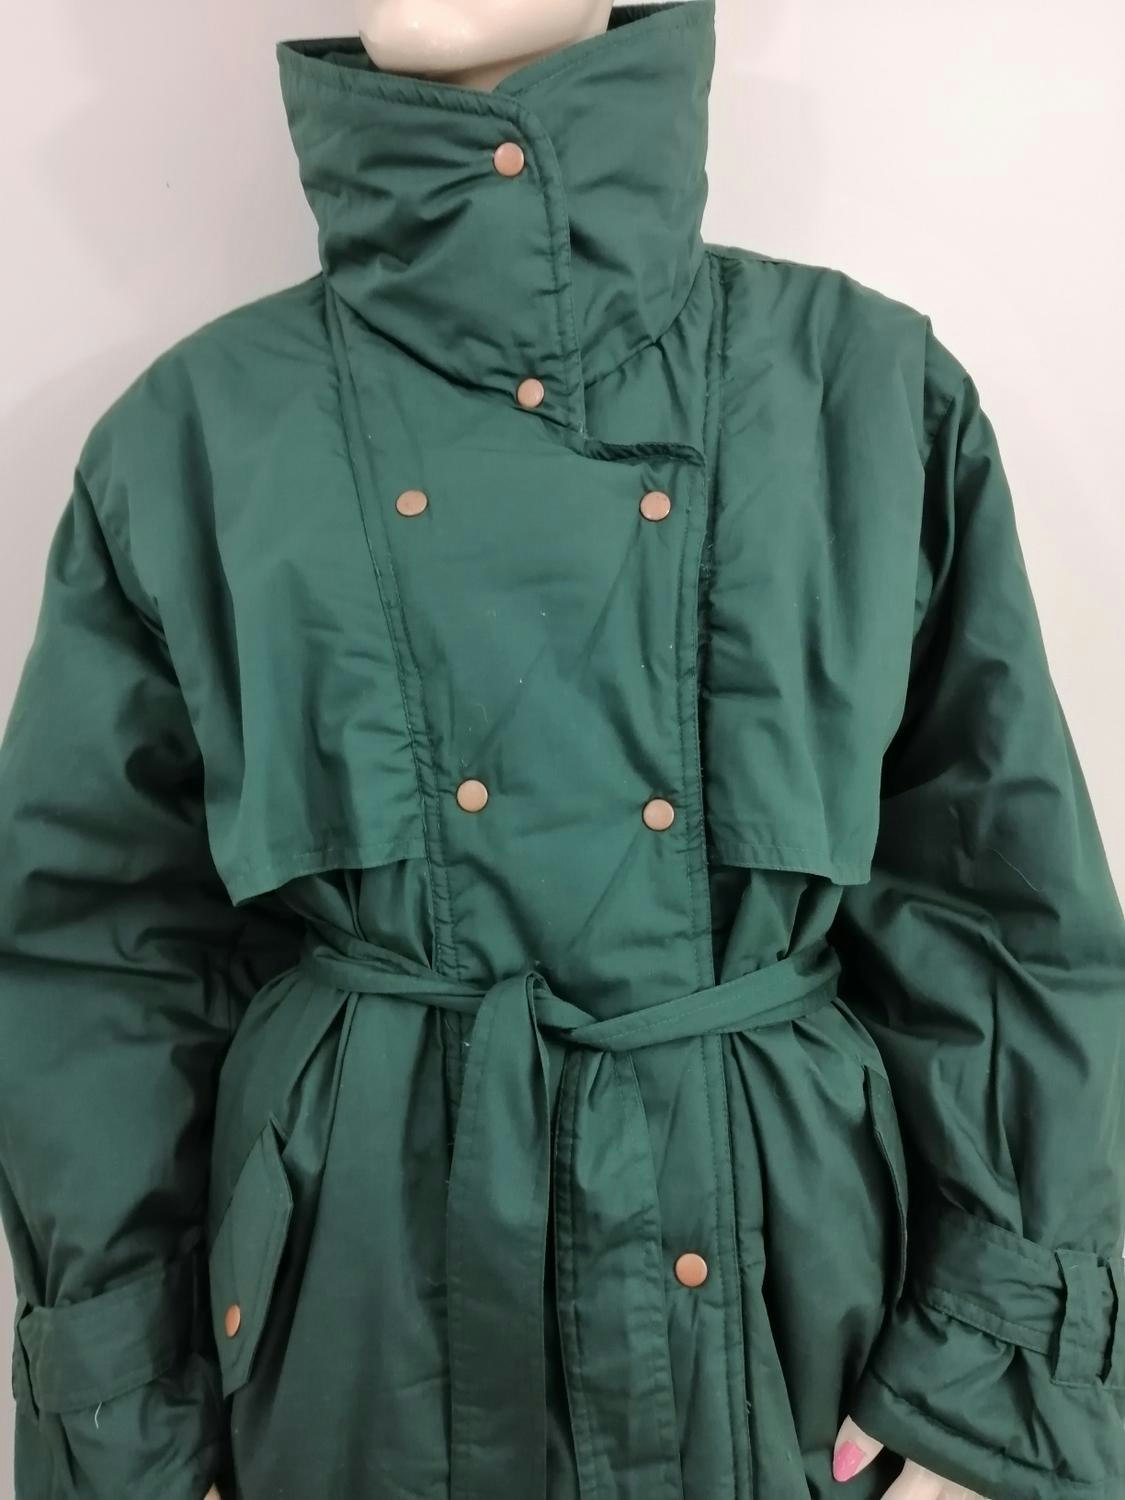 Second Hand tjock grön kappa täck-kappa krage skärp dubbelknäppt 80-tal -  Vintage Corner Österlen